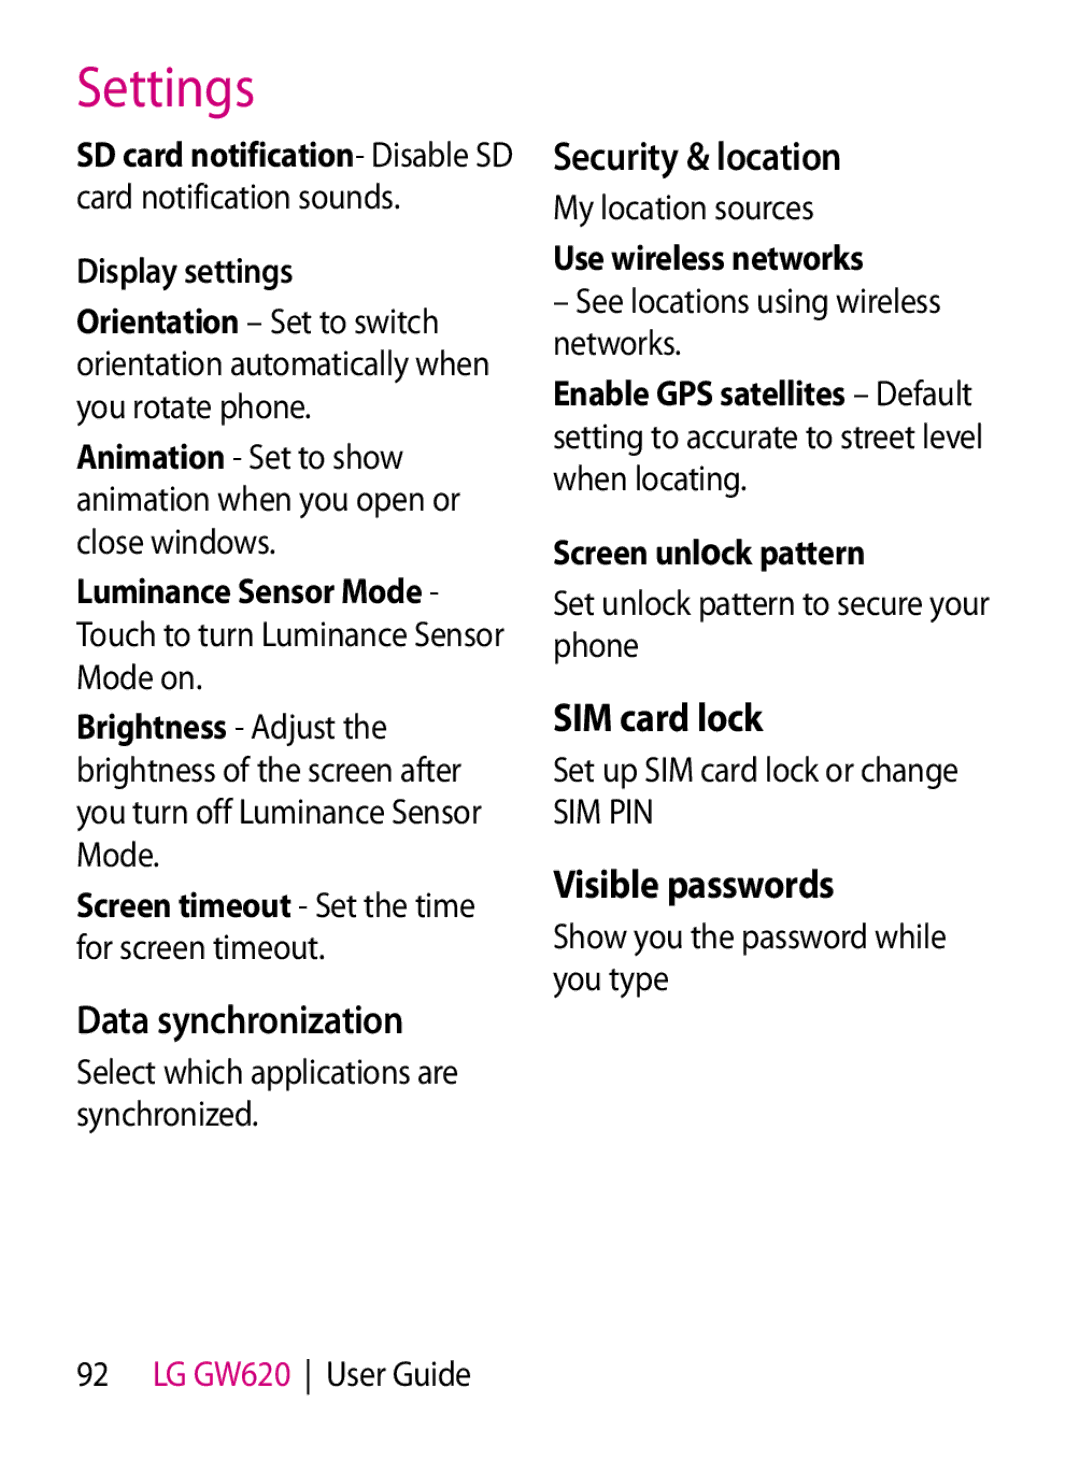 Mitel GW620 manual Data synchronization, Security & location, SIM card lock, Visible passwords 